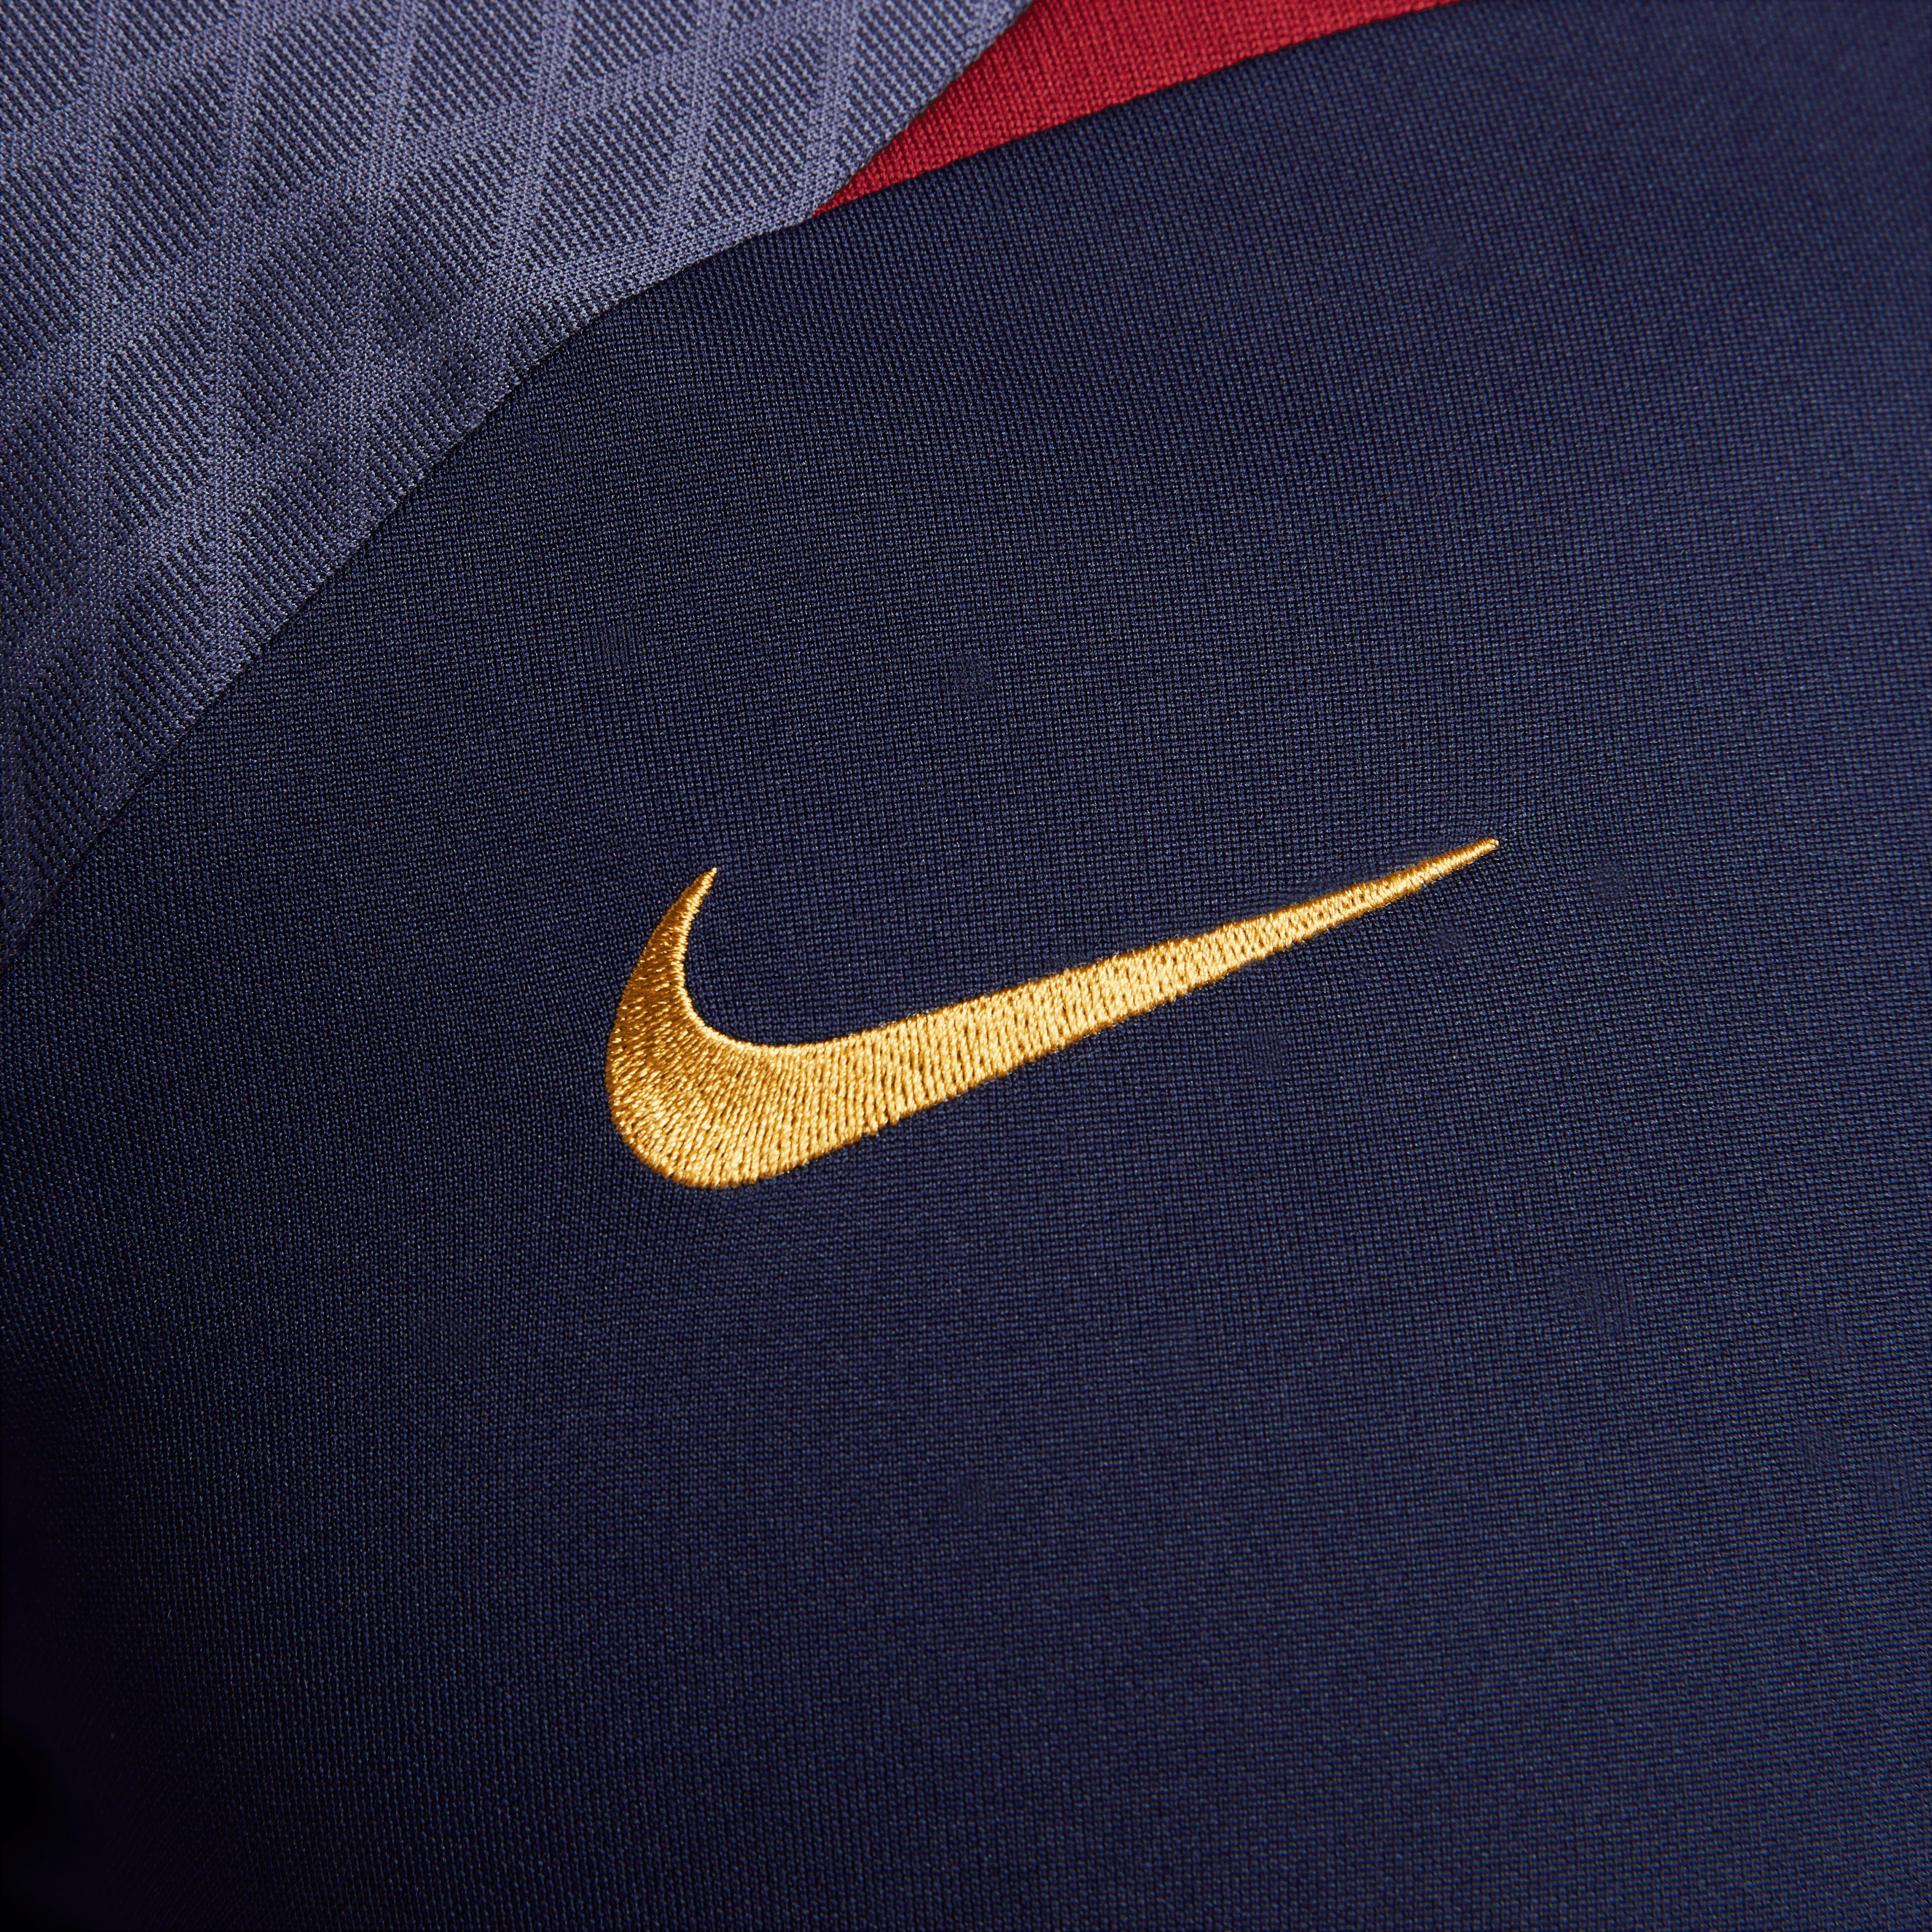 Nike Men's Paris Saint-Germain Strike Dri-FIT Knit Soccer Top